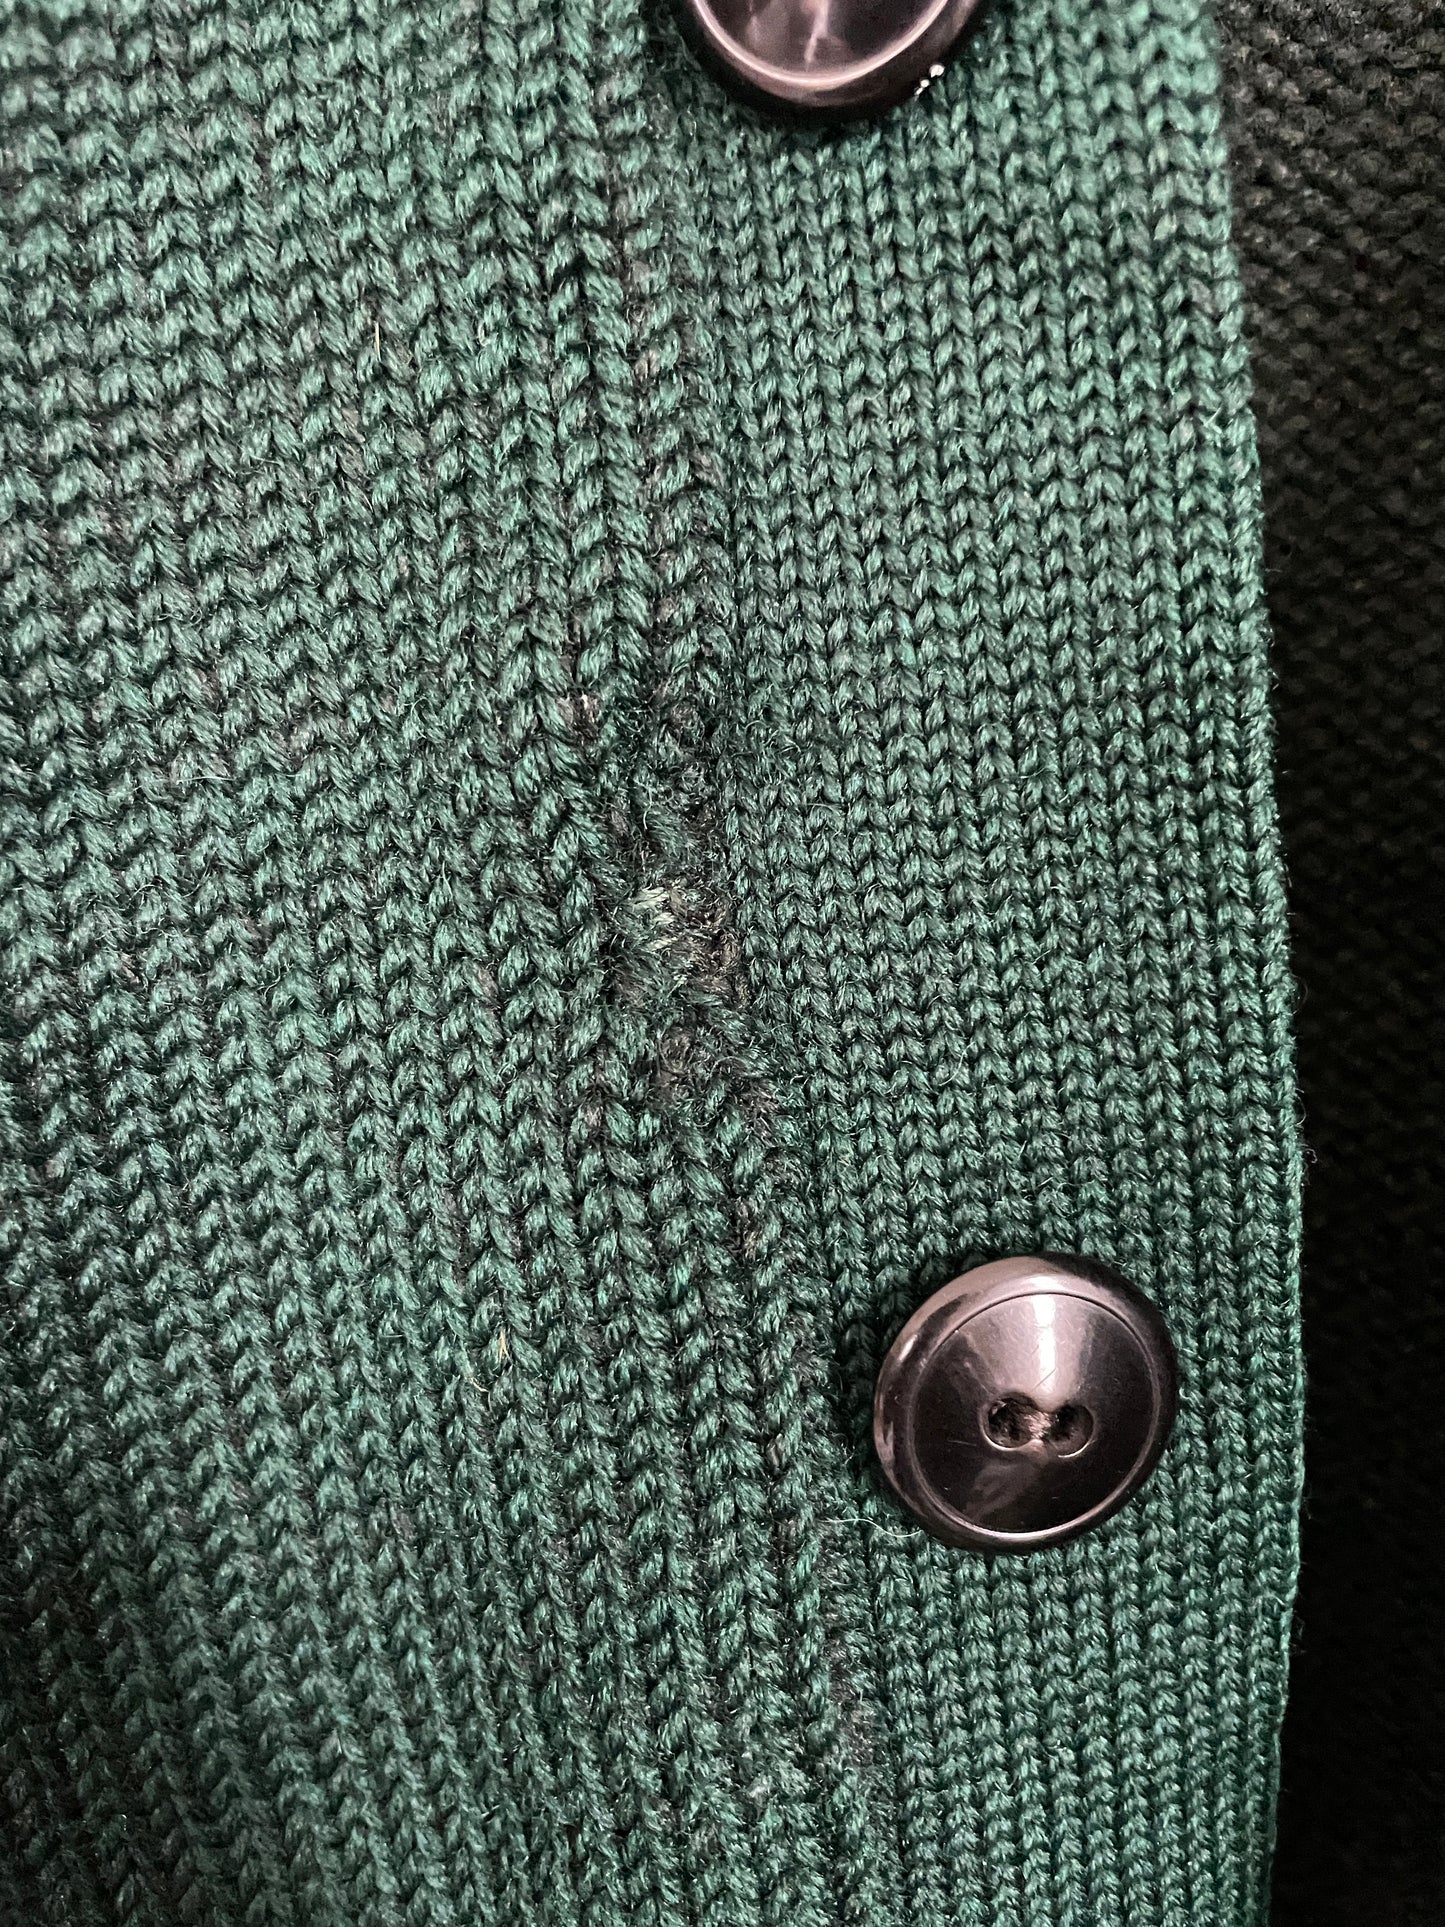 50s Green Letterman Sweater